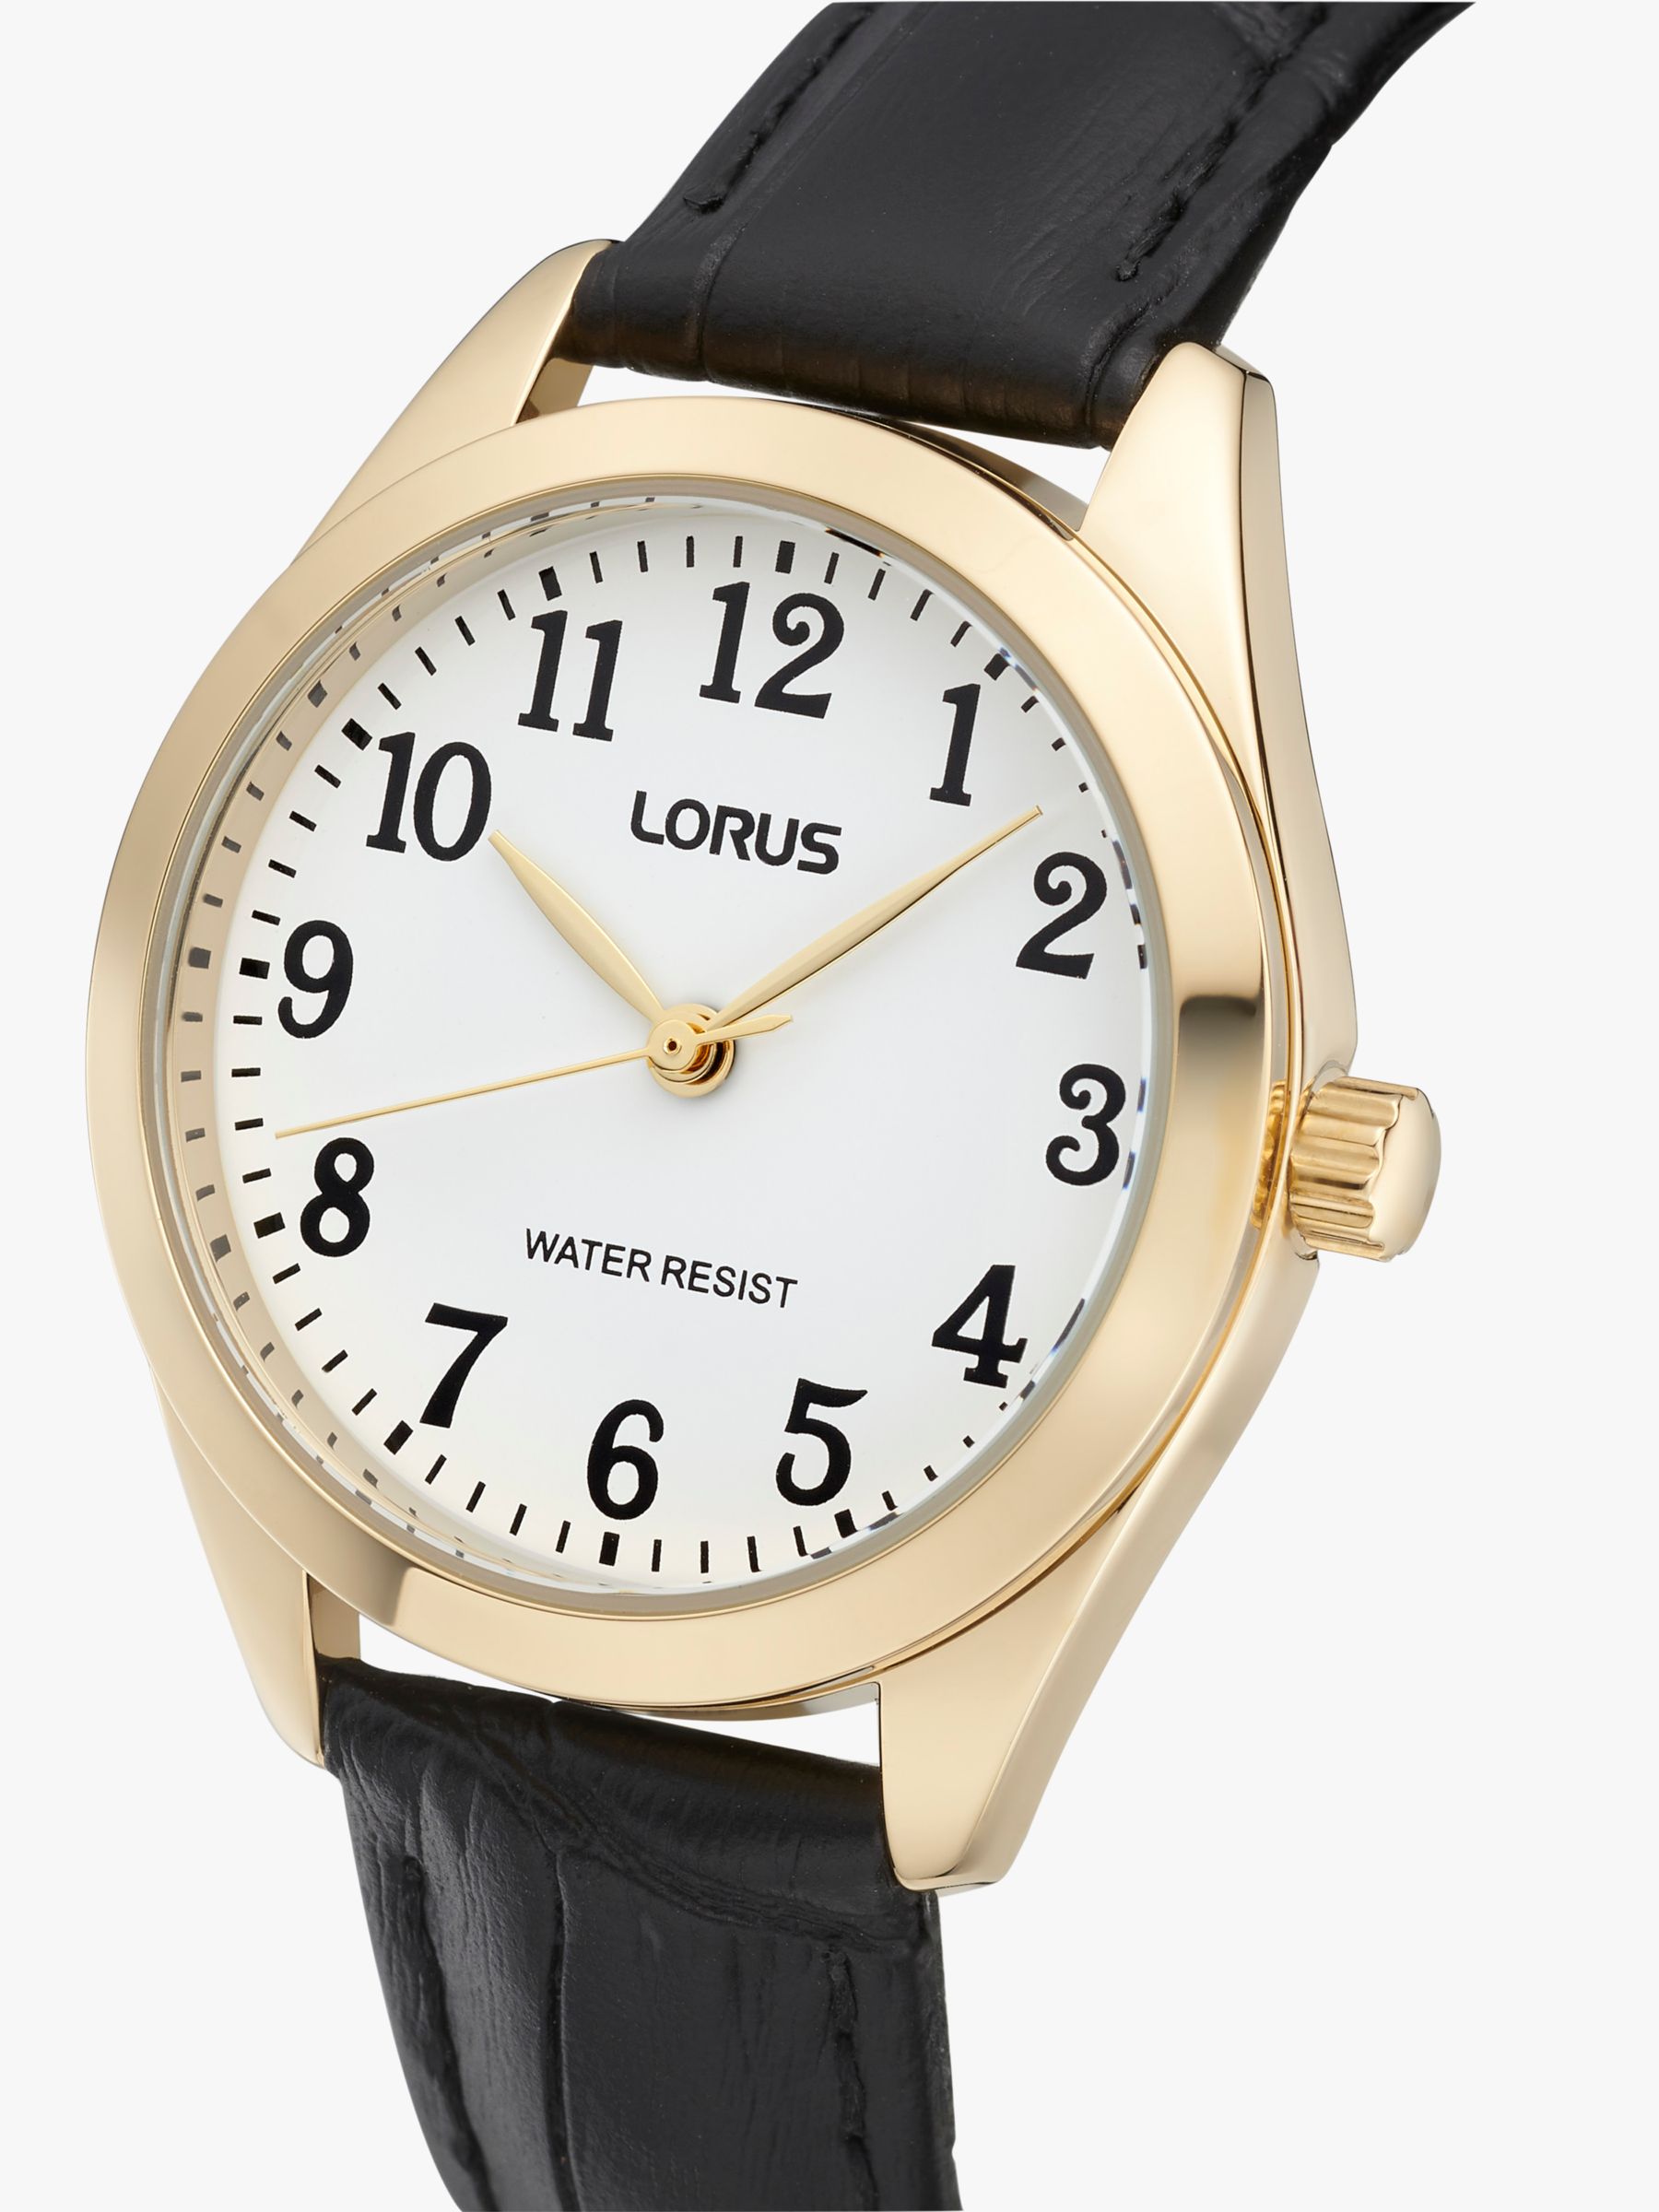 Lorus Women's Leather Strap Watch, Black/White RG238TX9 at John Lewis ...